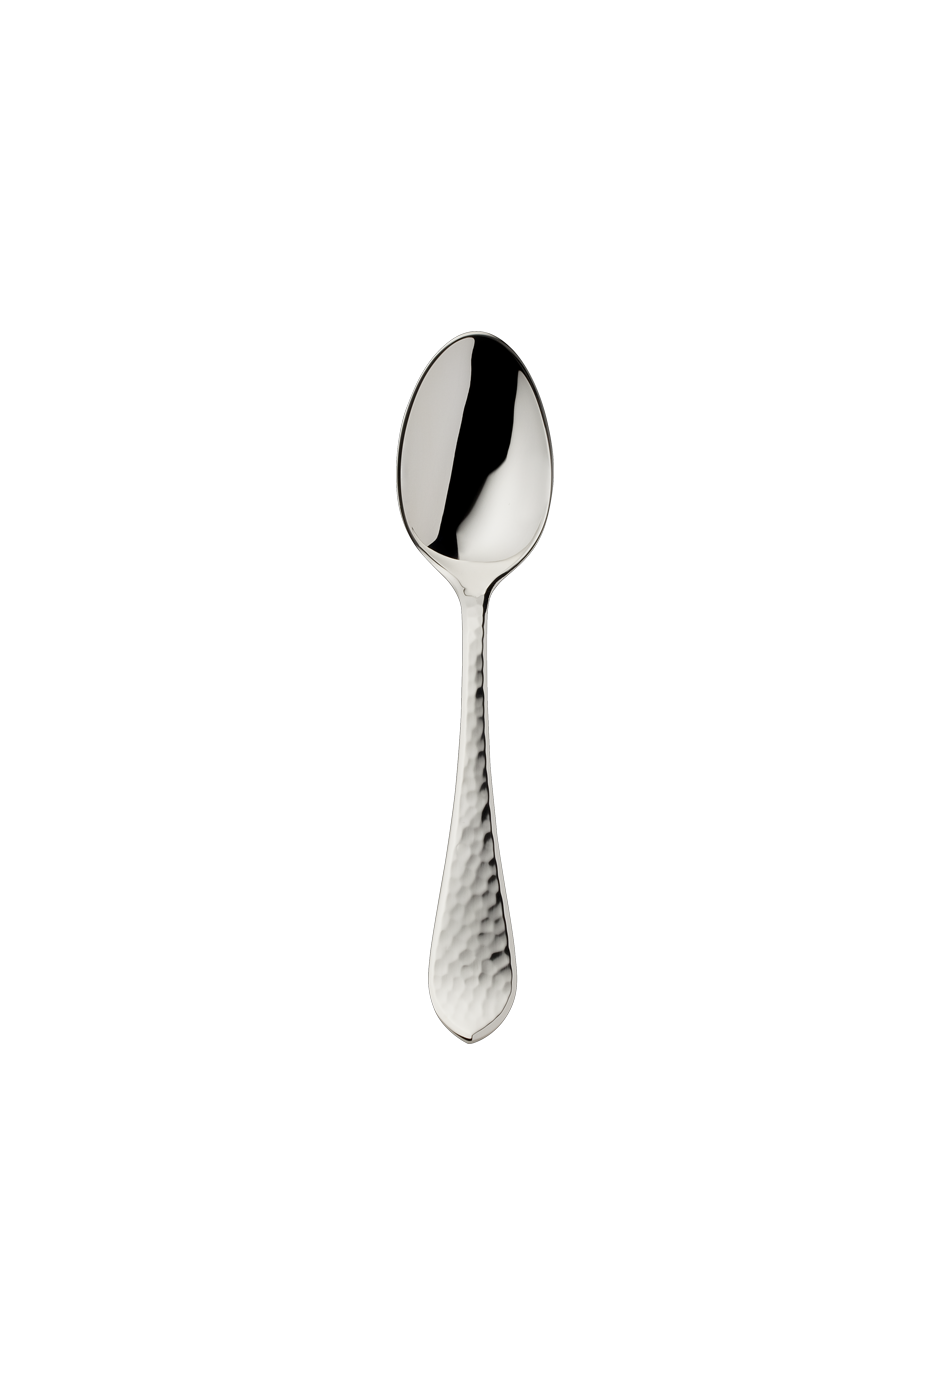 Martelé Coffee Spoon 14,5 Cm (150g massive silverplated)